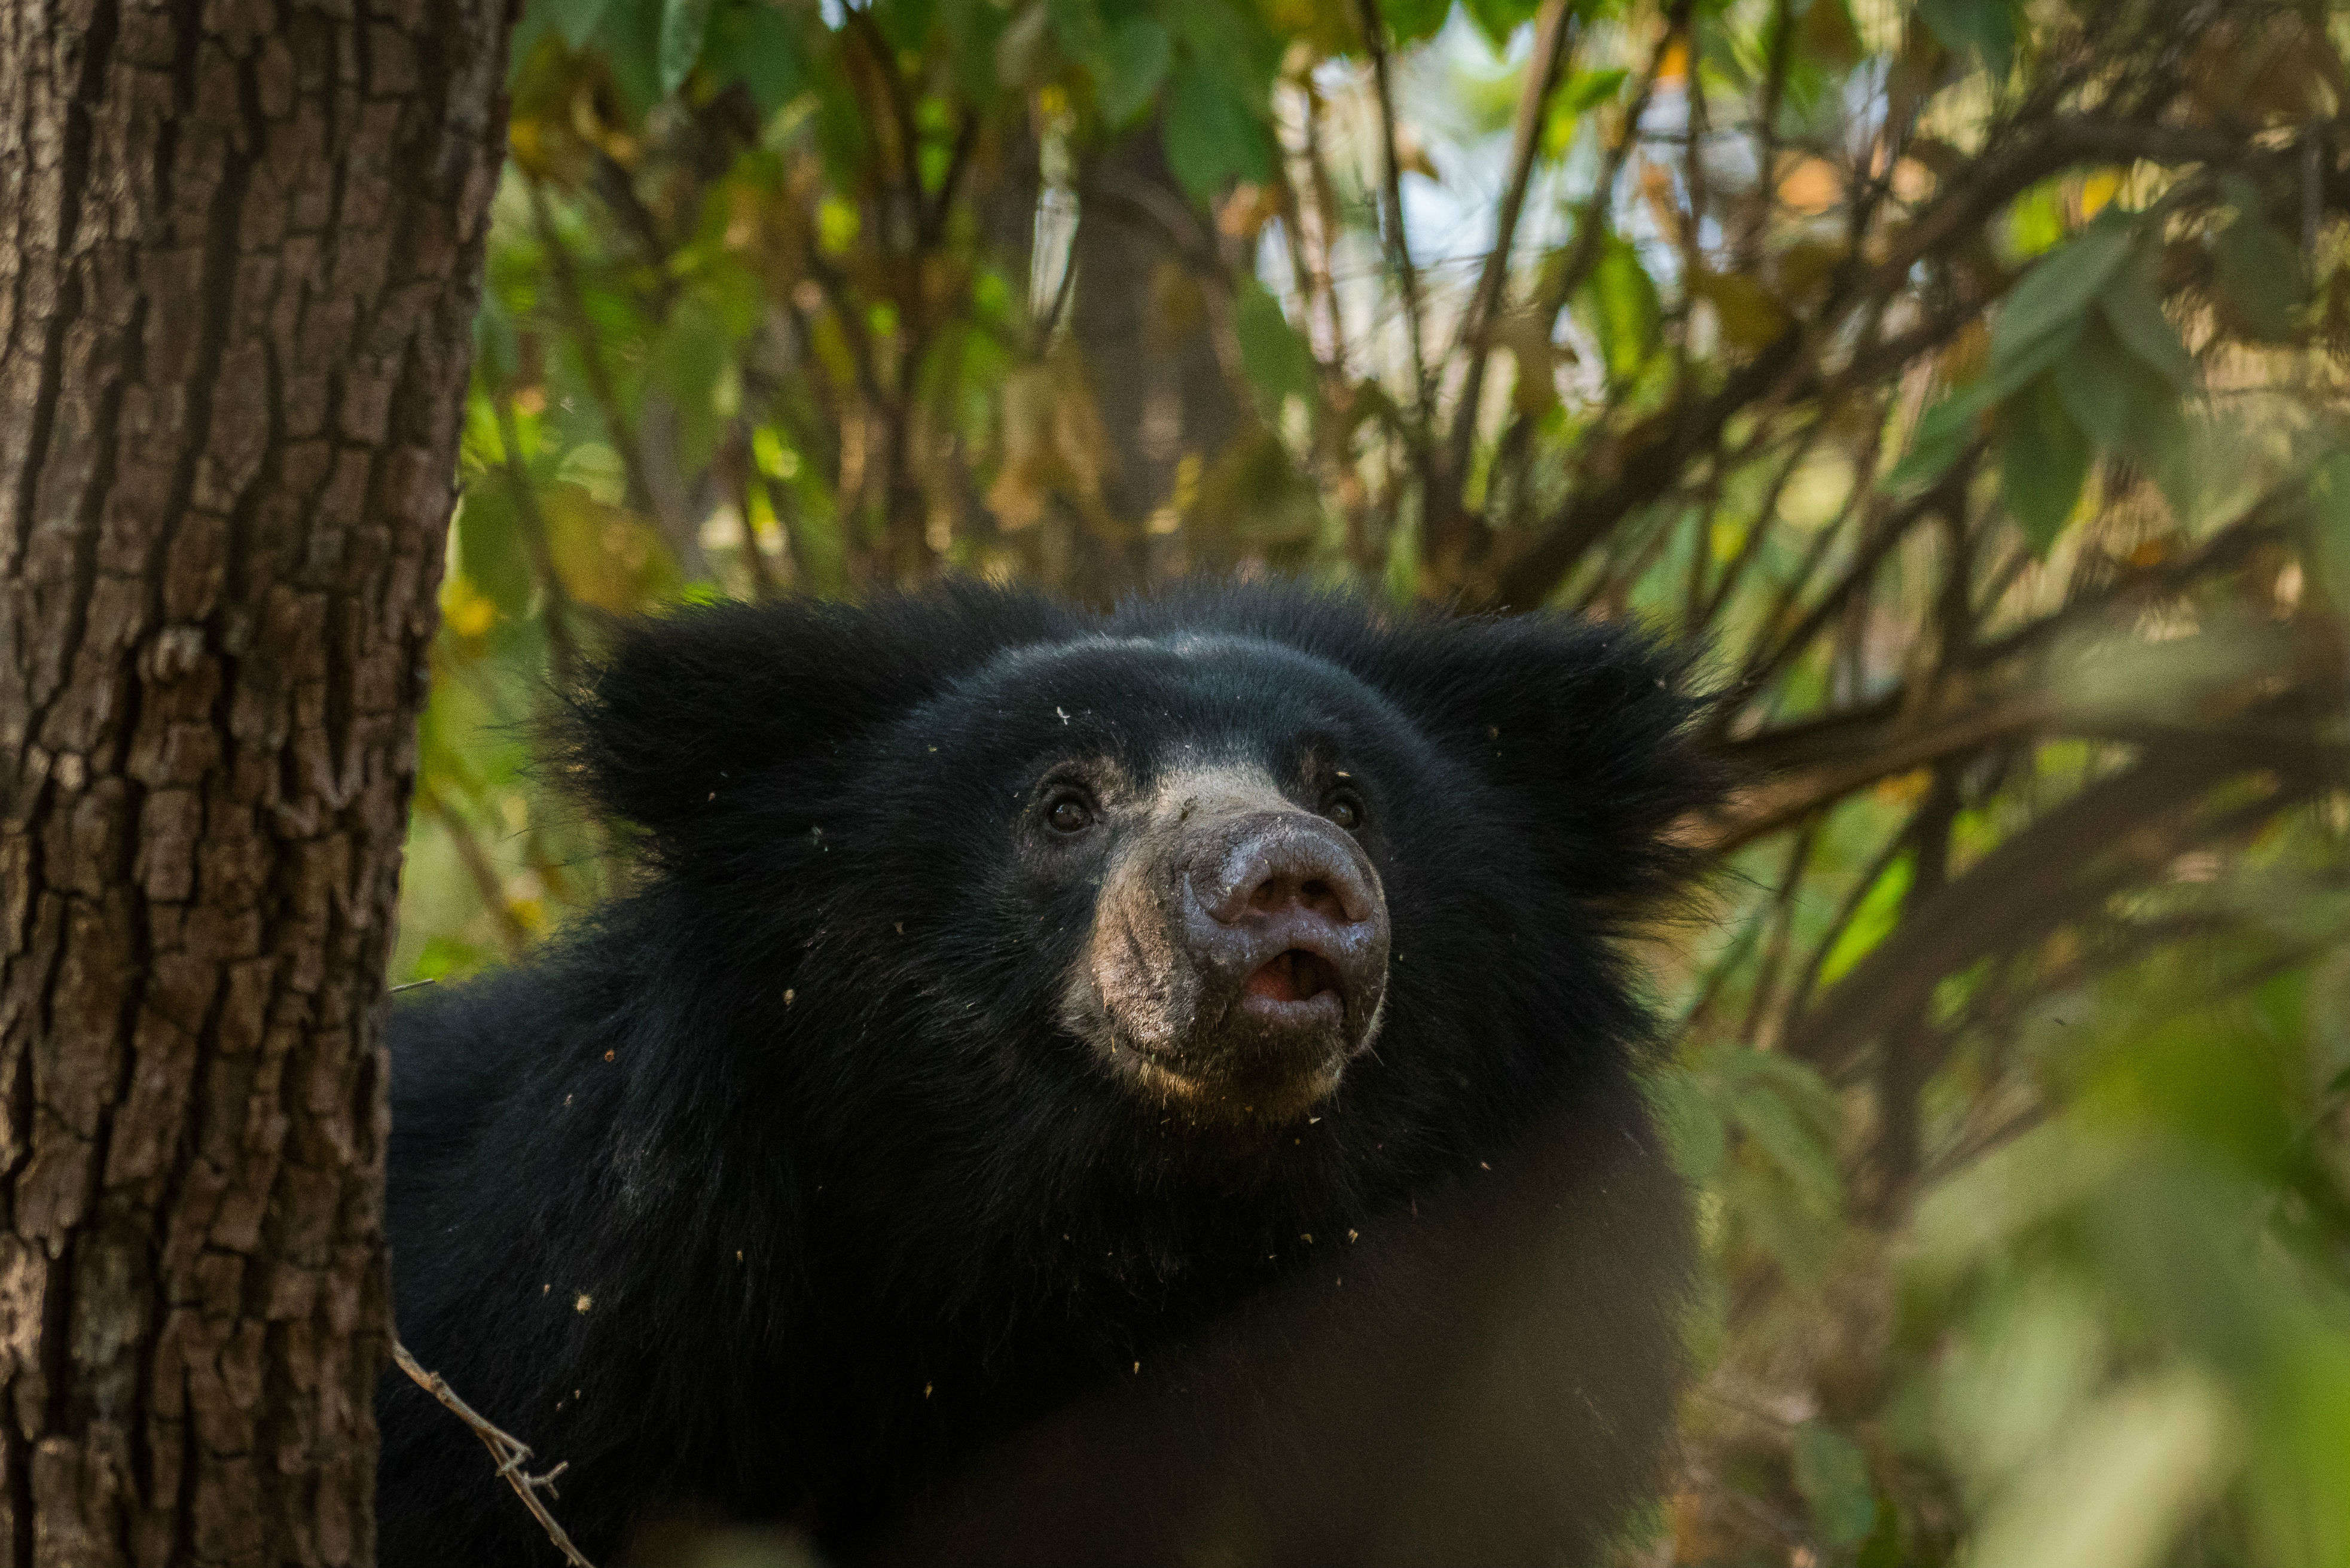 Daroji Sloth Bear Sanctuary is a fun sanctuary for all